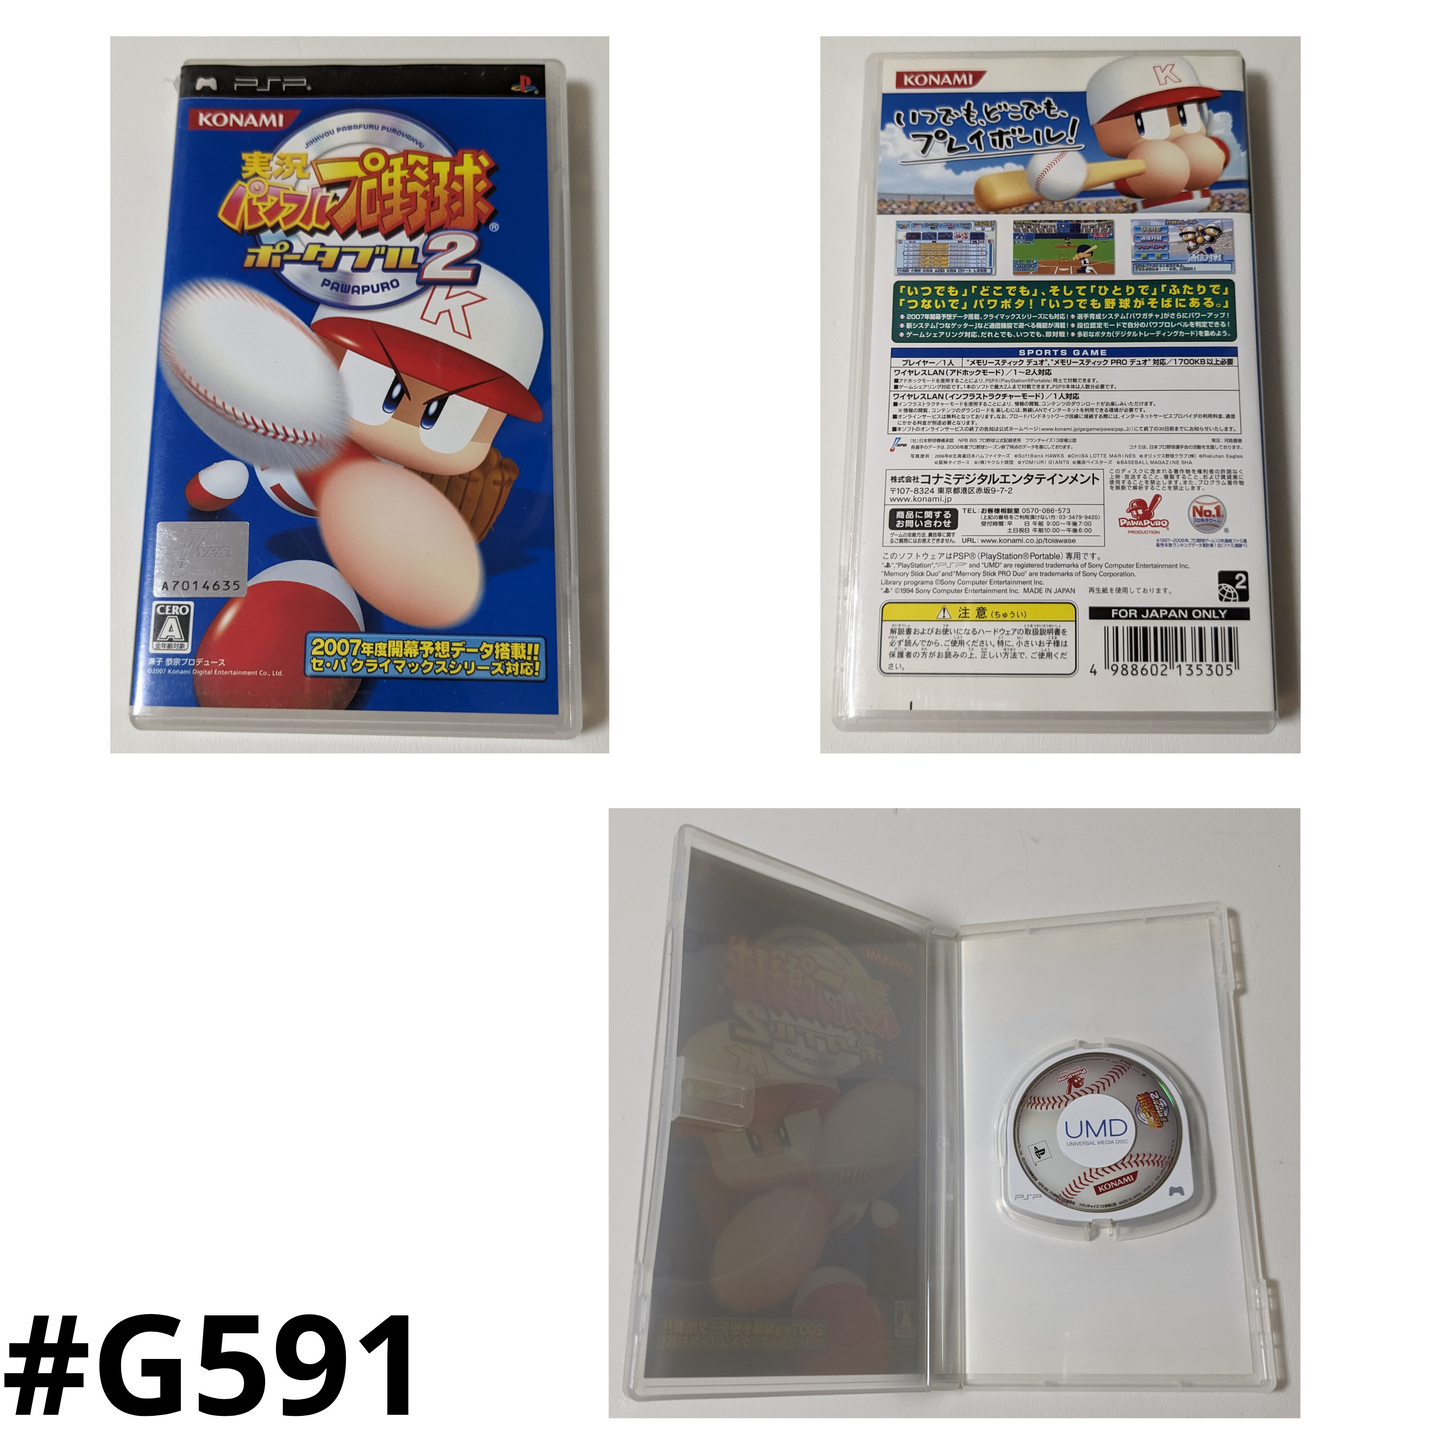 Jikkyou Krachtige draagbare honkbal 2 | PSP | Japans